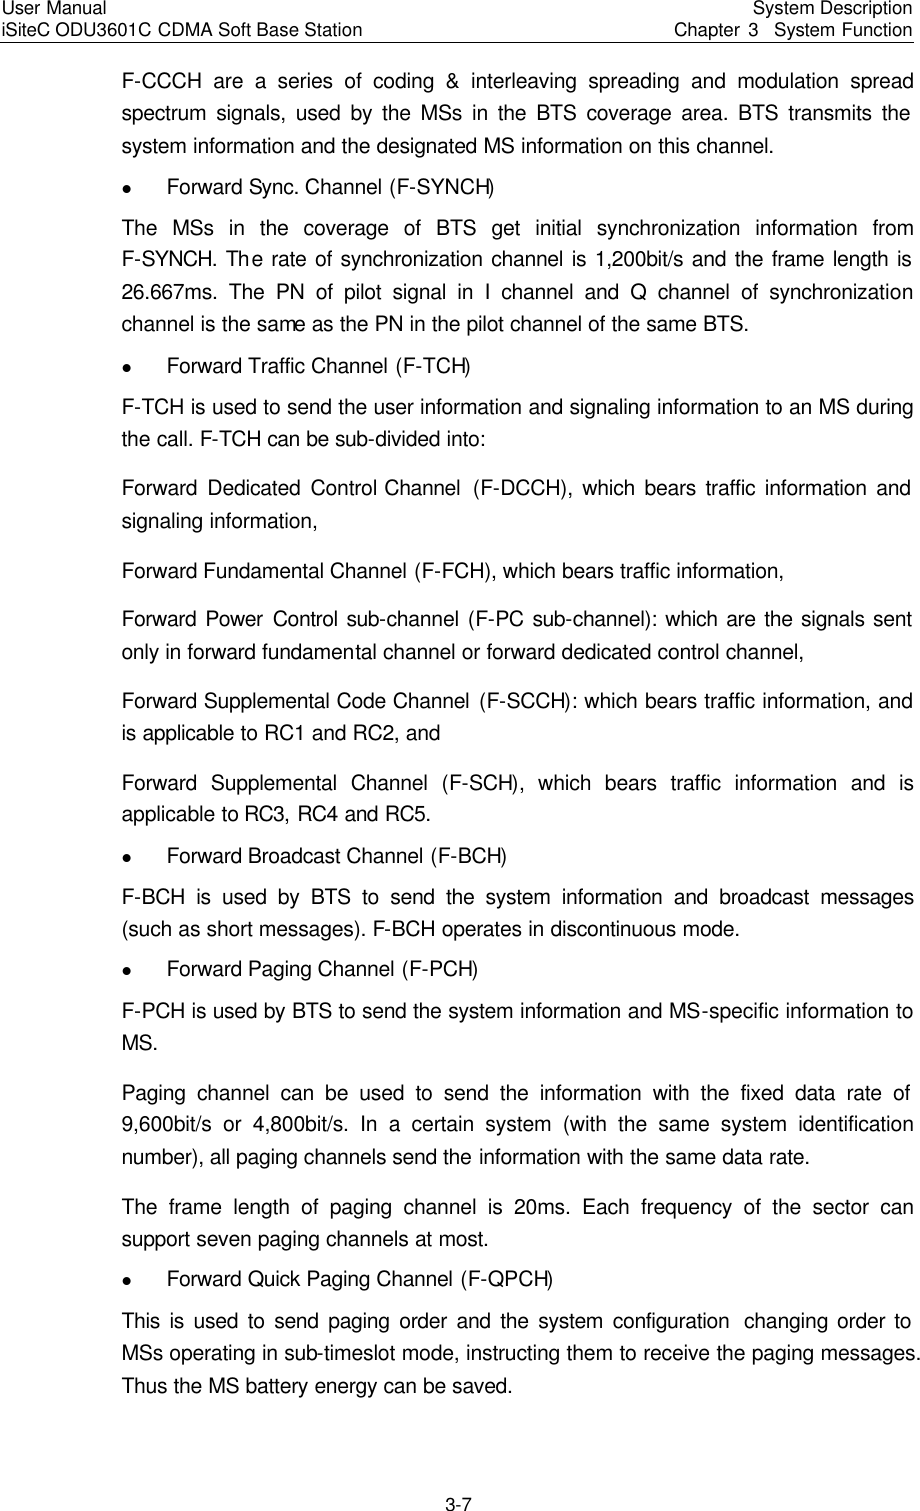 Page 37 of Huawei Technologies ODU3601C-800 CDMA Base Station User Manual 2